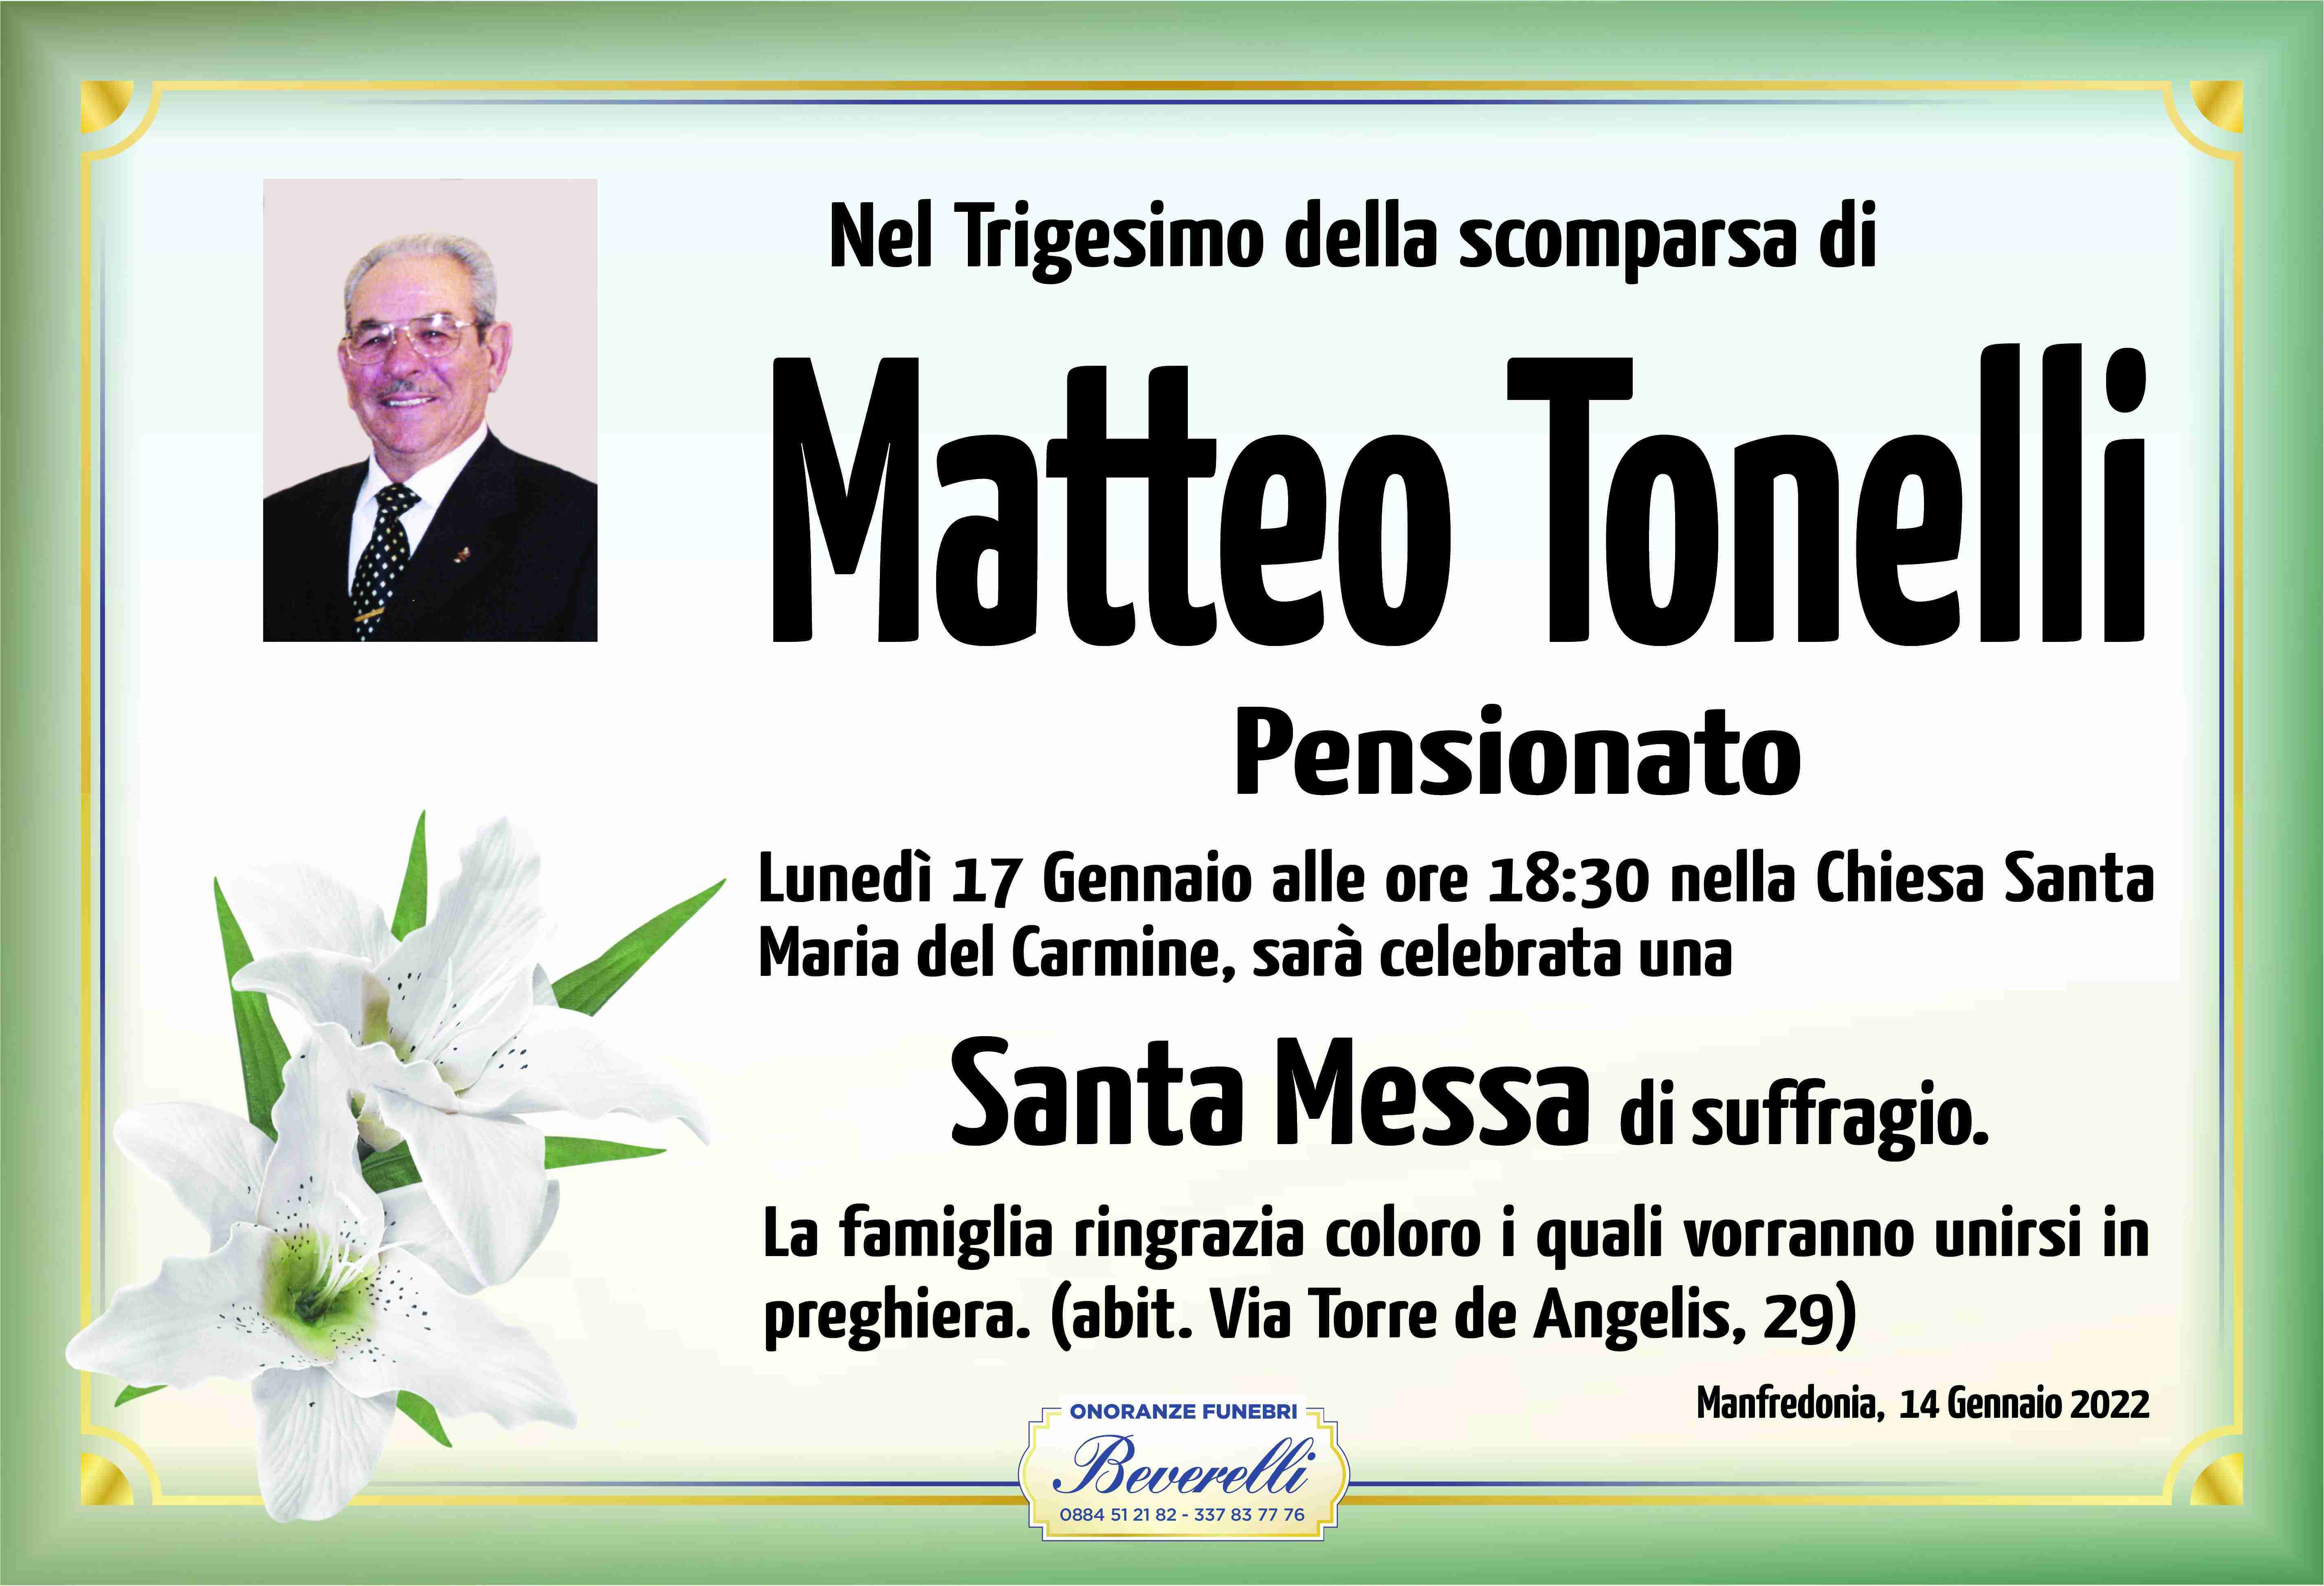 Matteo Tonelli